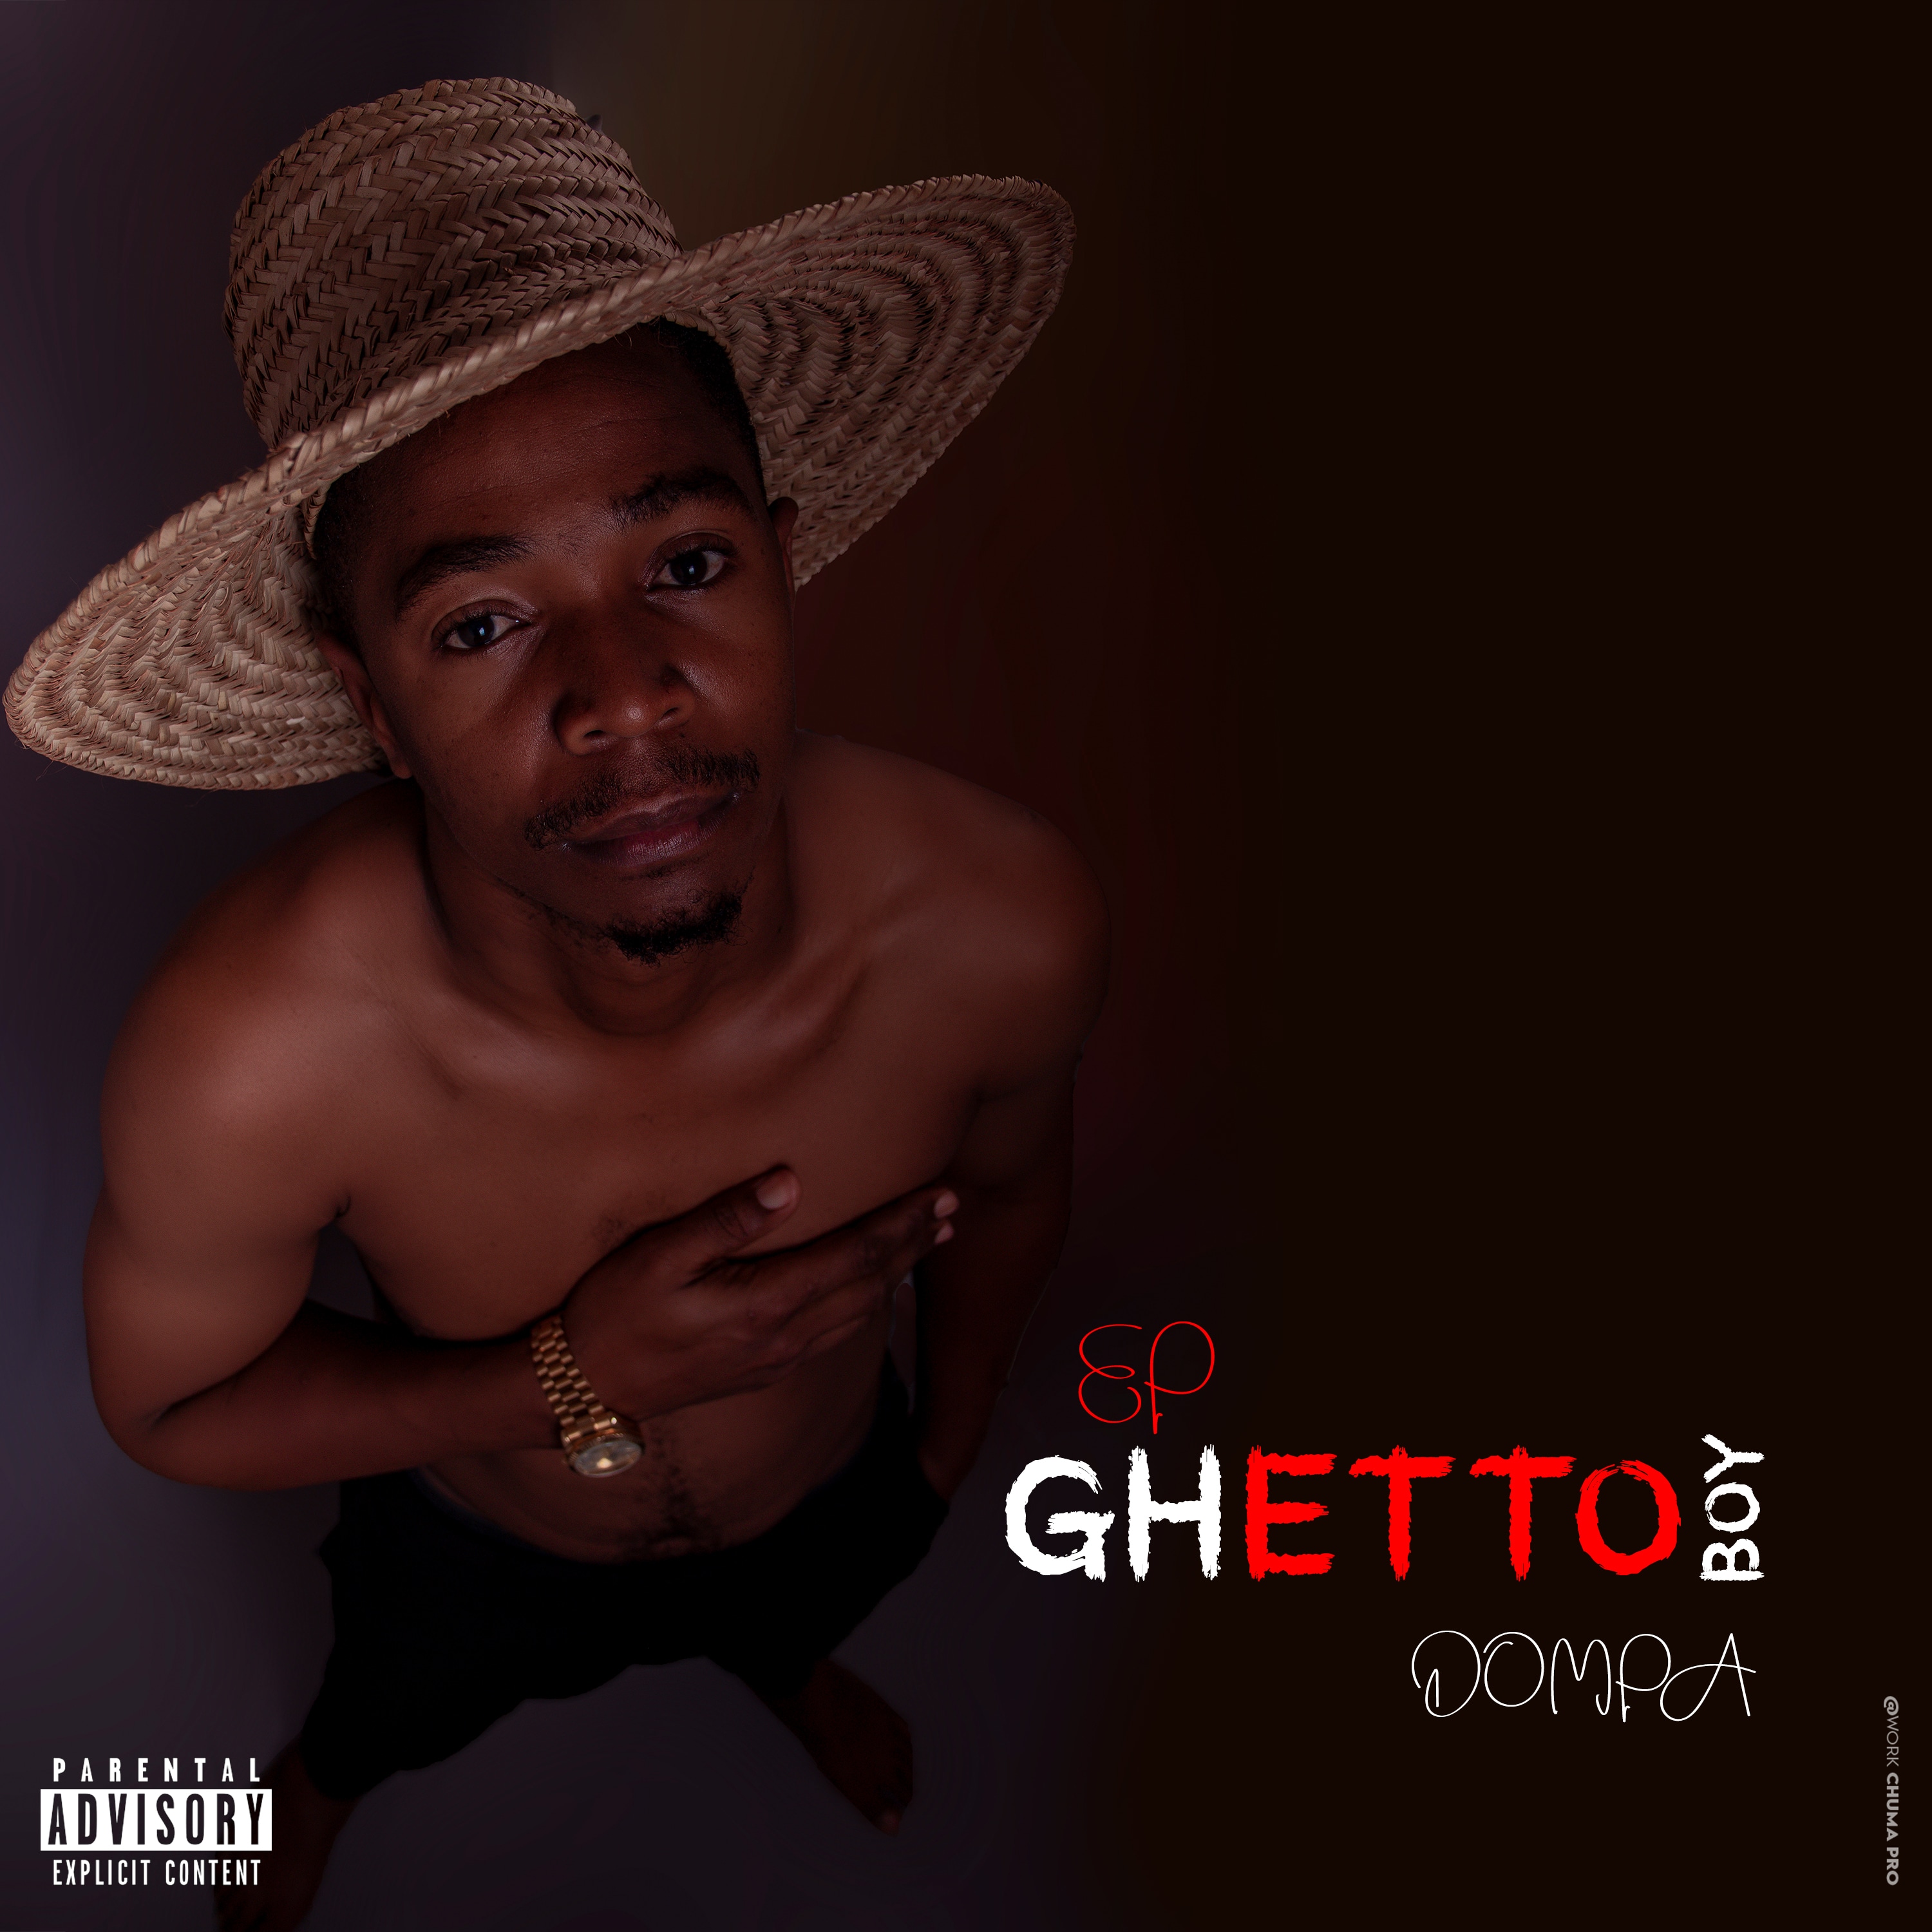 Ghetto Boy by DomPa Tz | Album